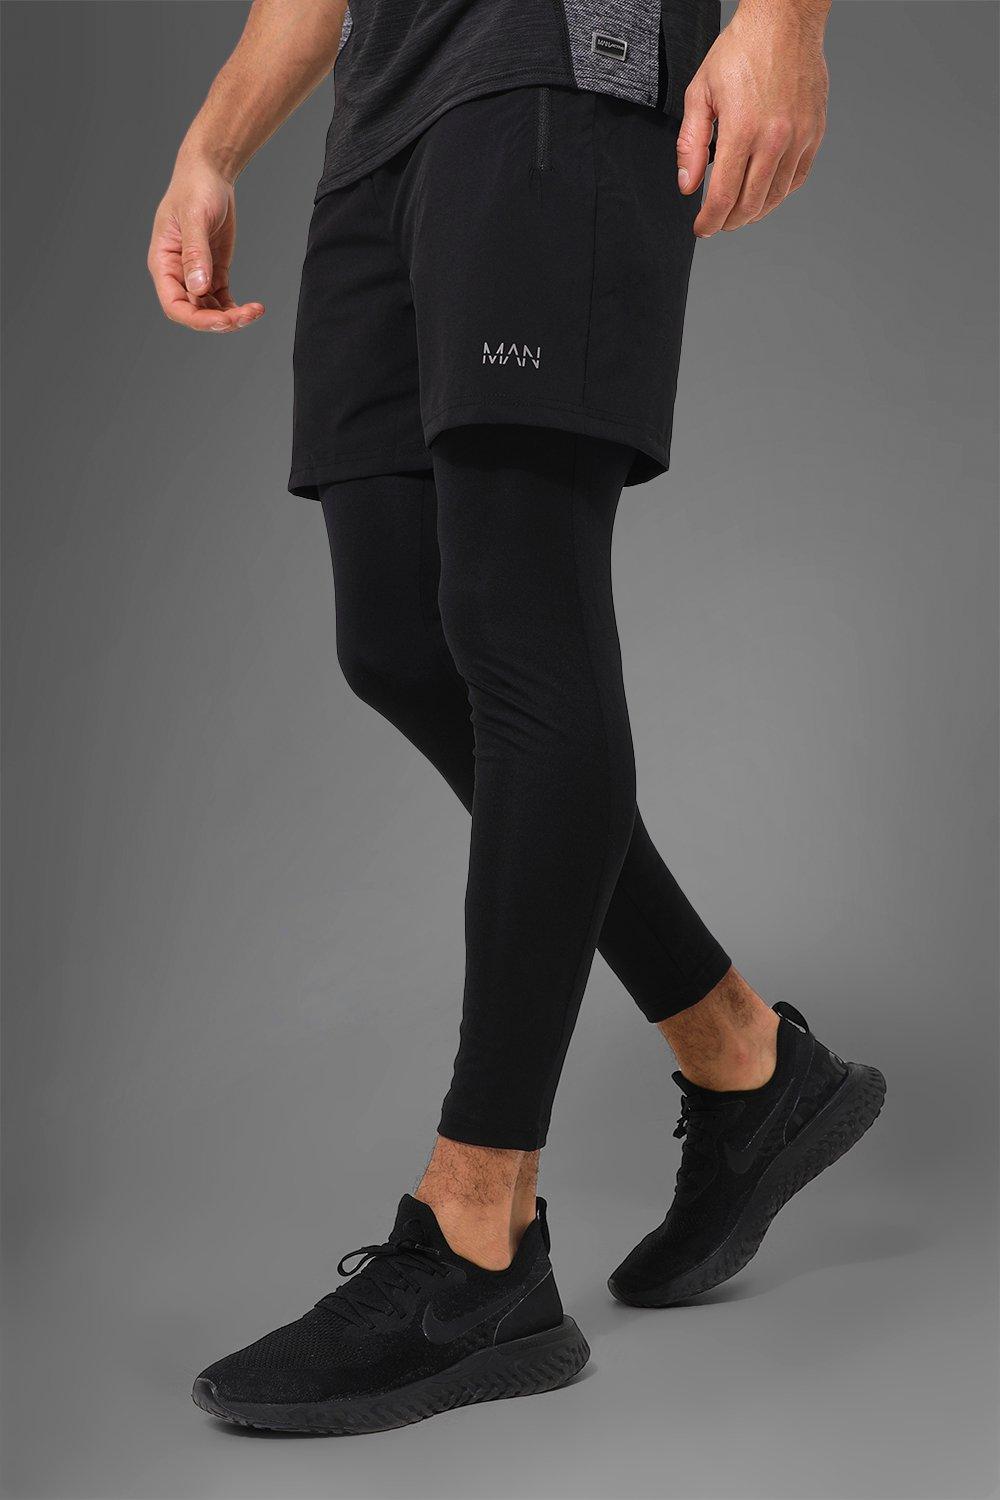 LAB360° 2-in-1 Legging Shorts - Black